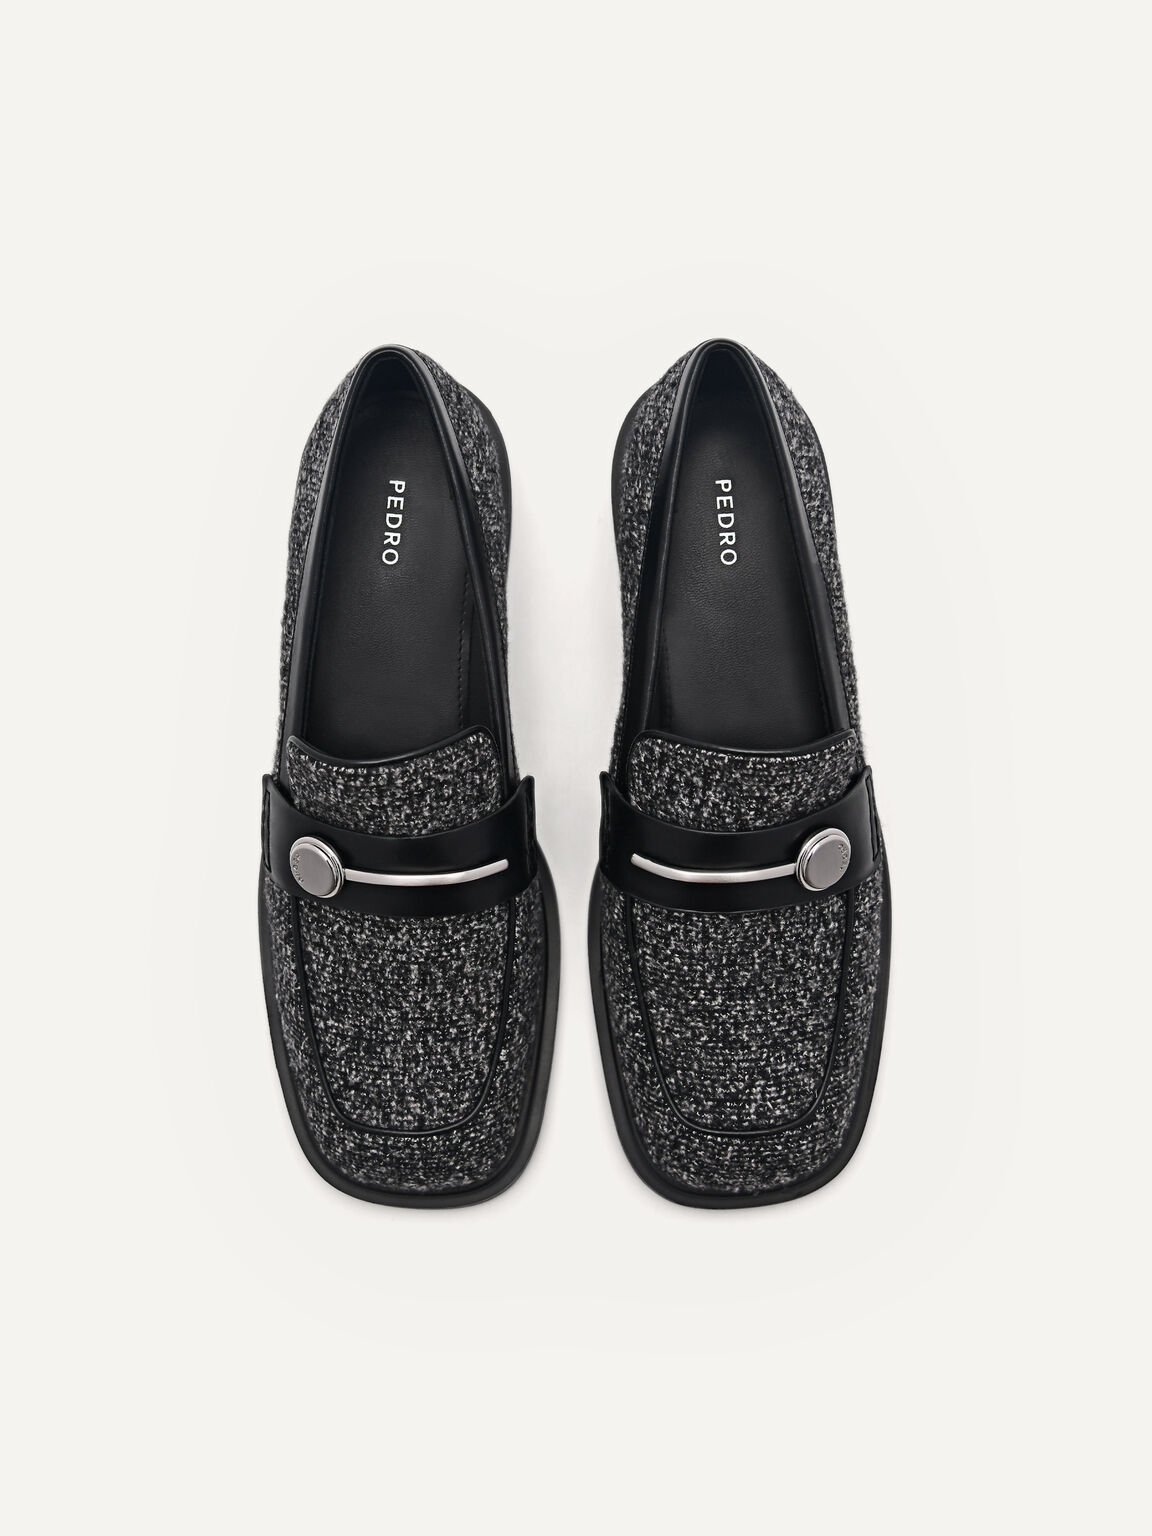 Orb Loafers, Black